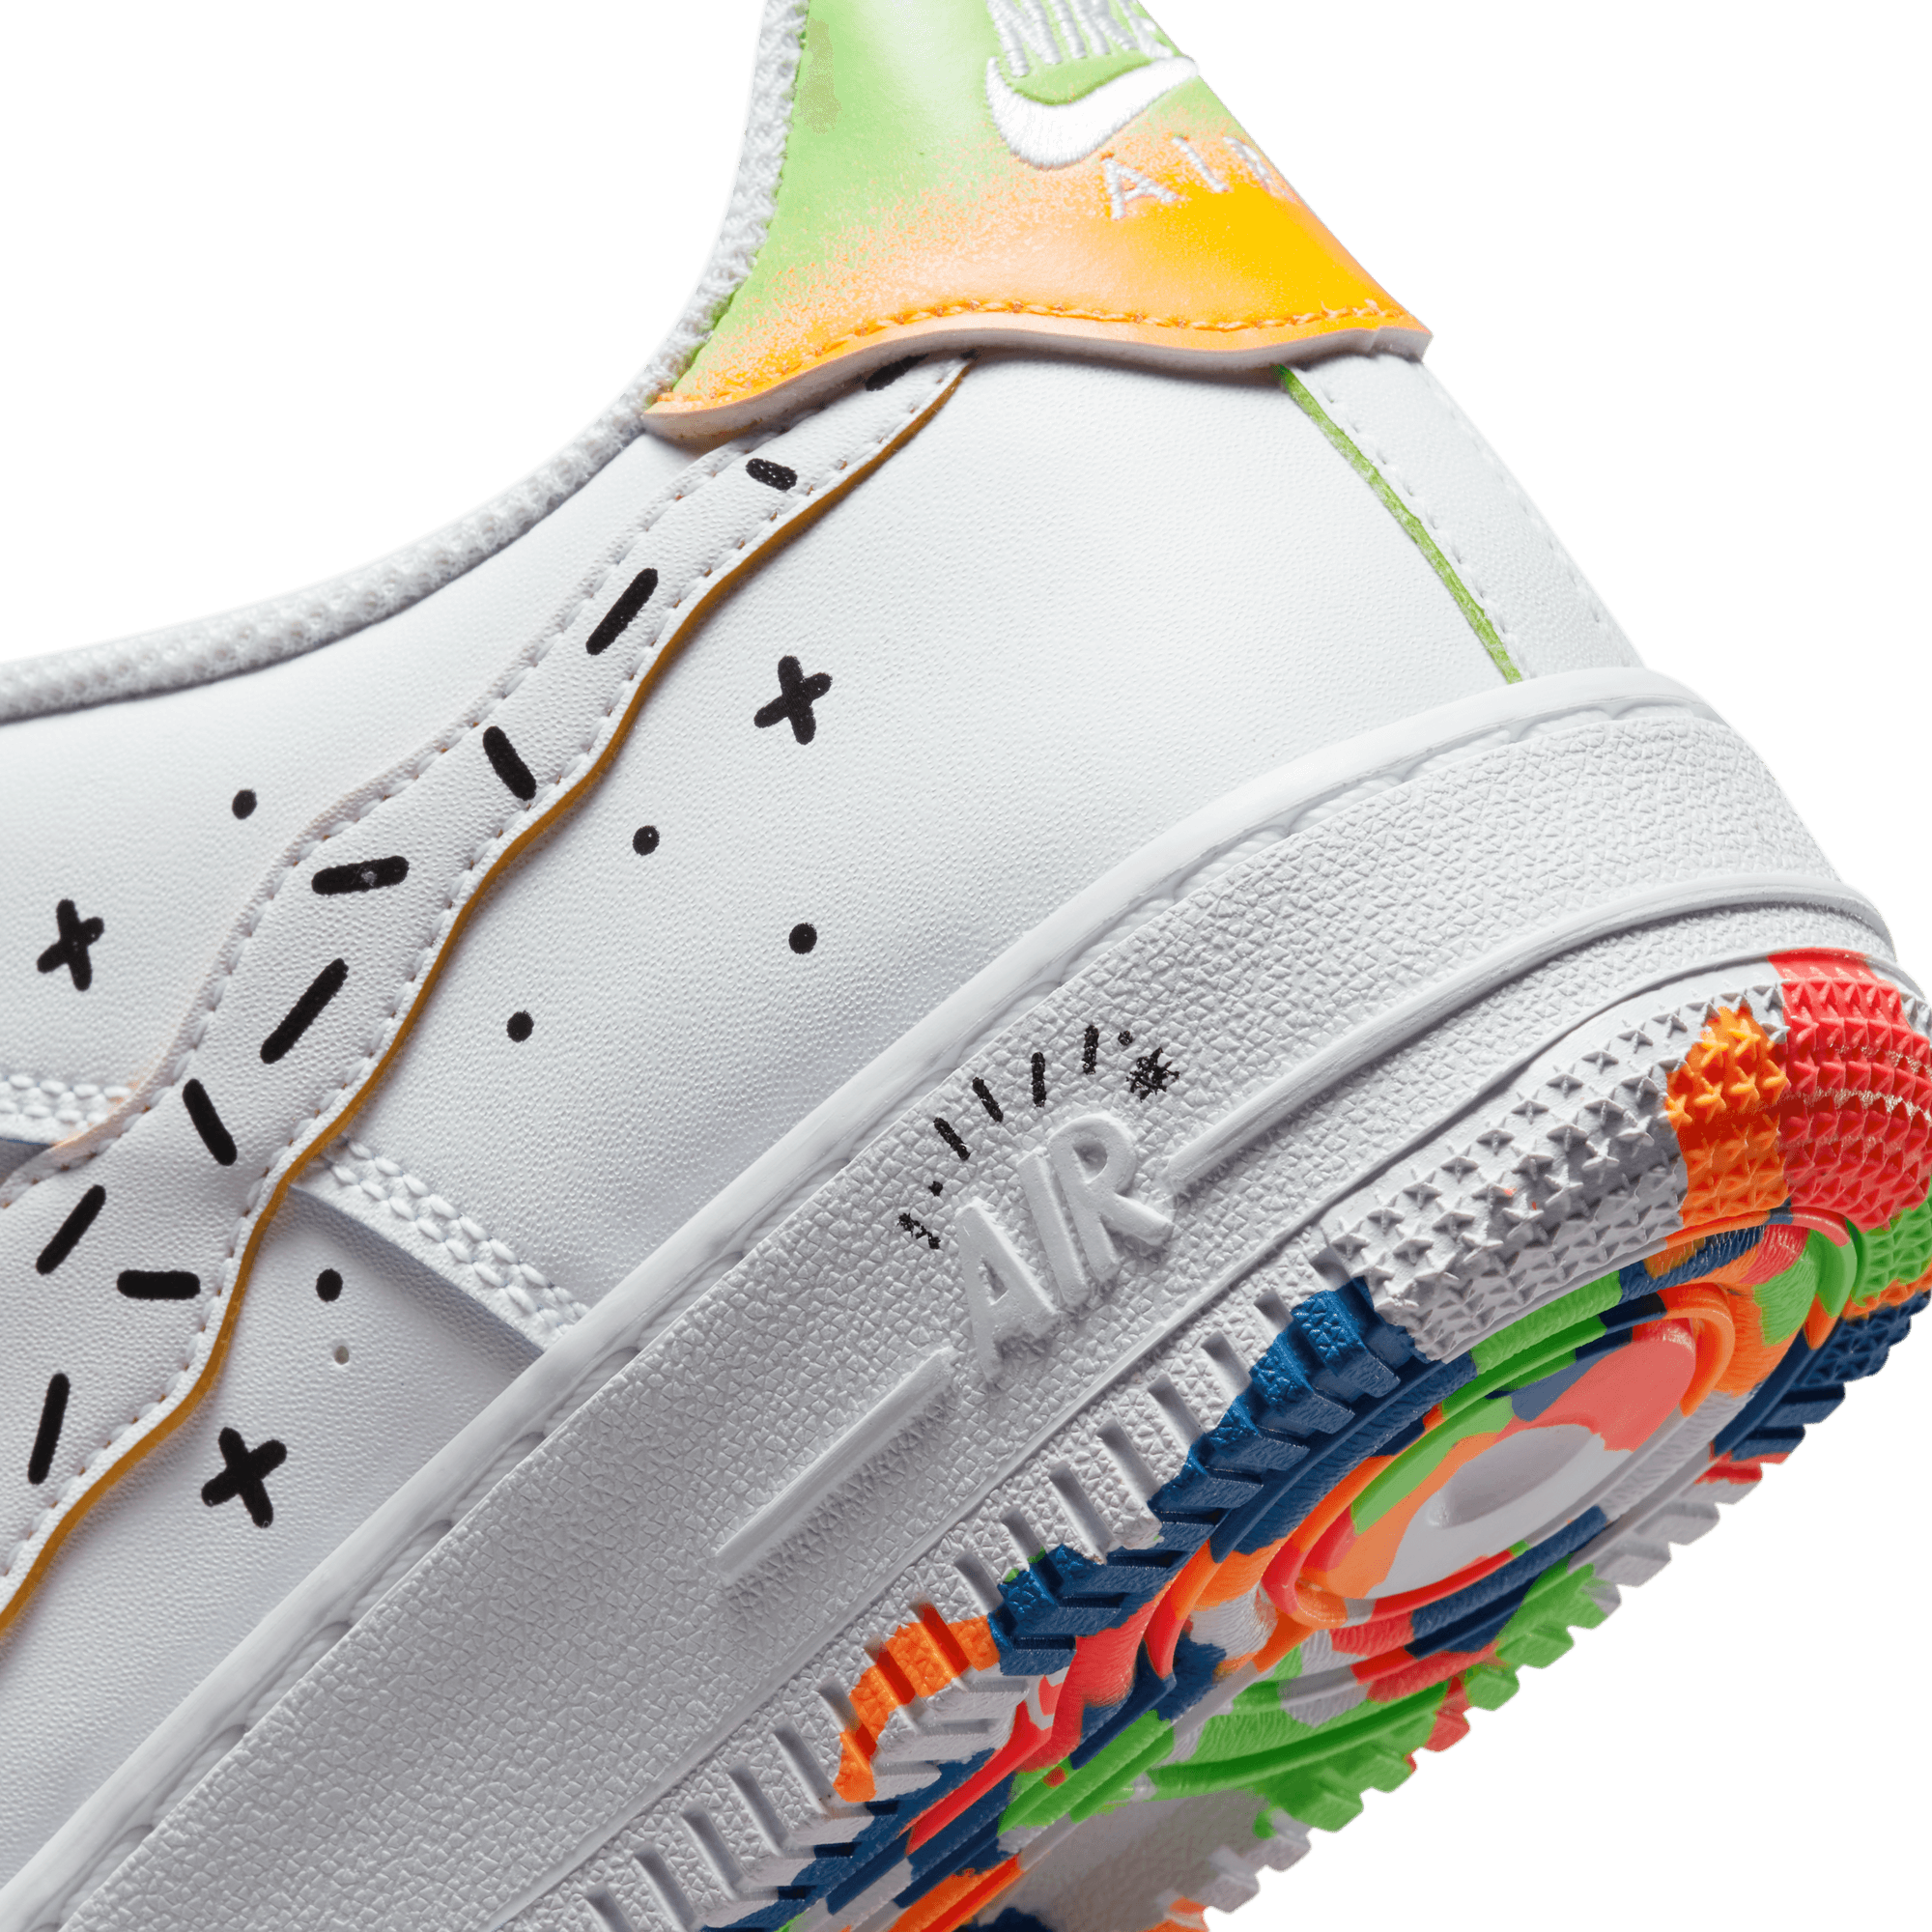 Neon Splash Custom Air Force One Sneakers | HipHopCloset